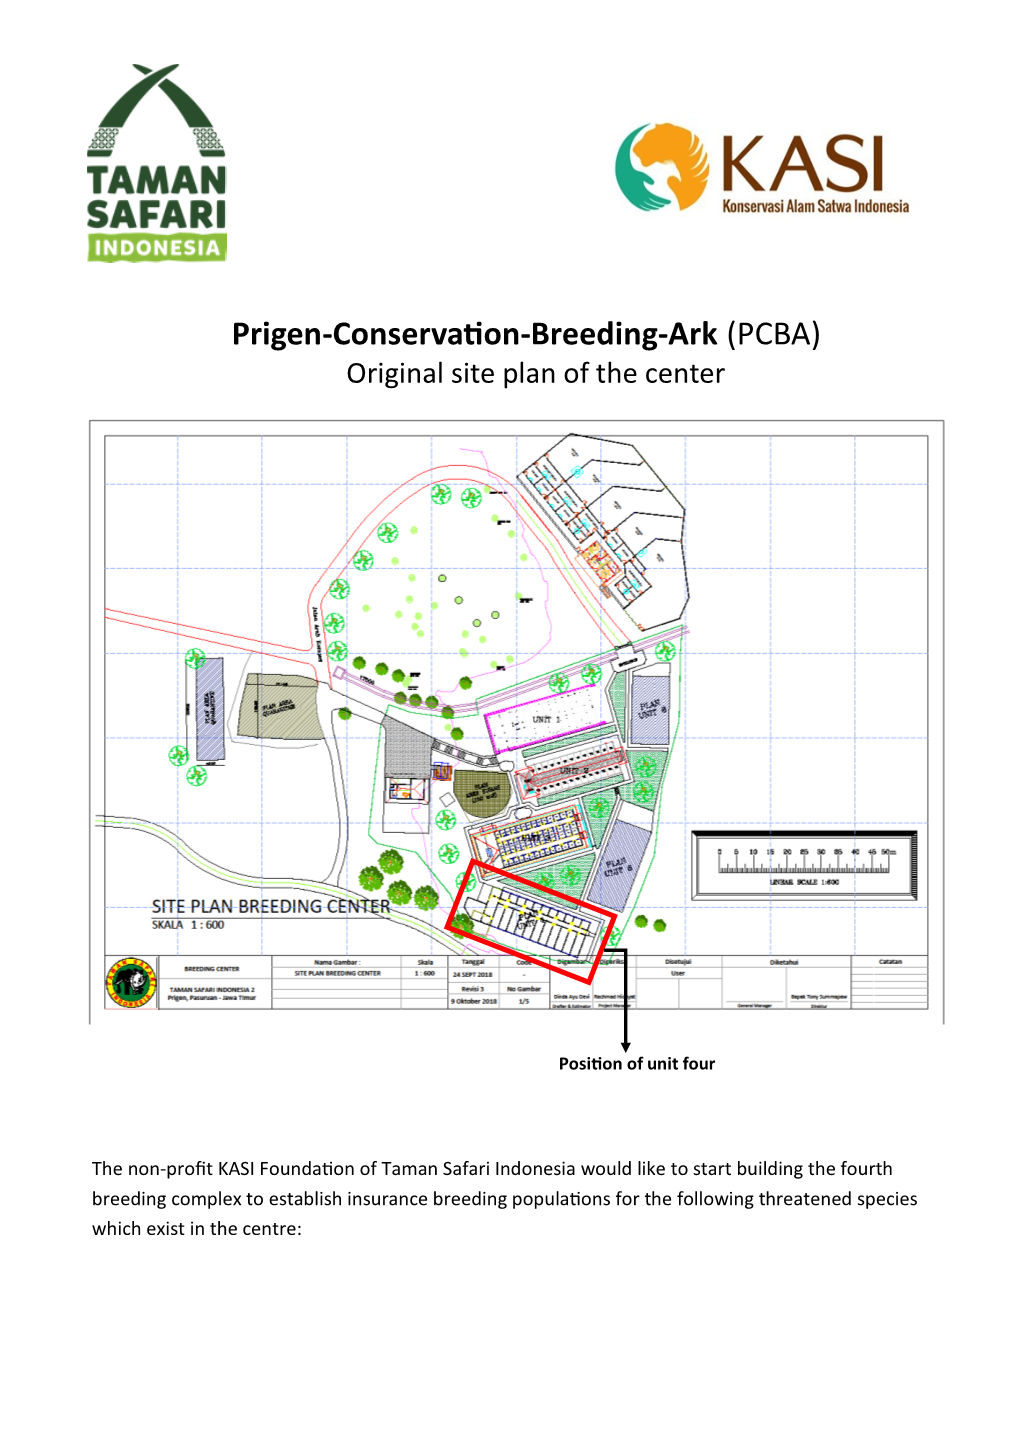 Prigen-Conservation-Breeding-Ark (PCBA) Original Site Plan of the Center